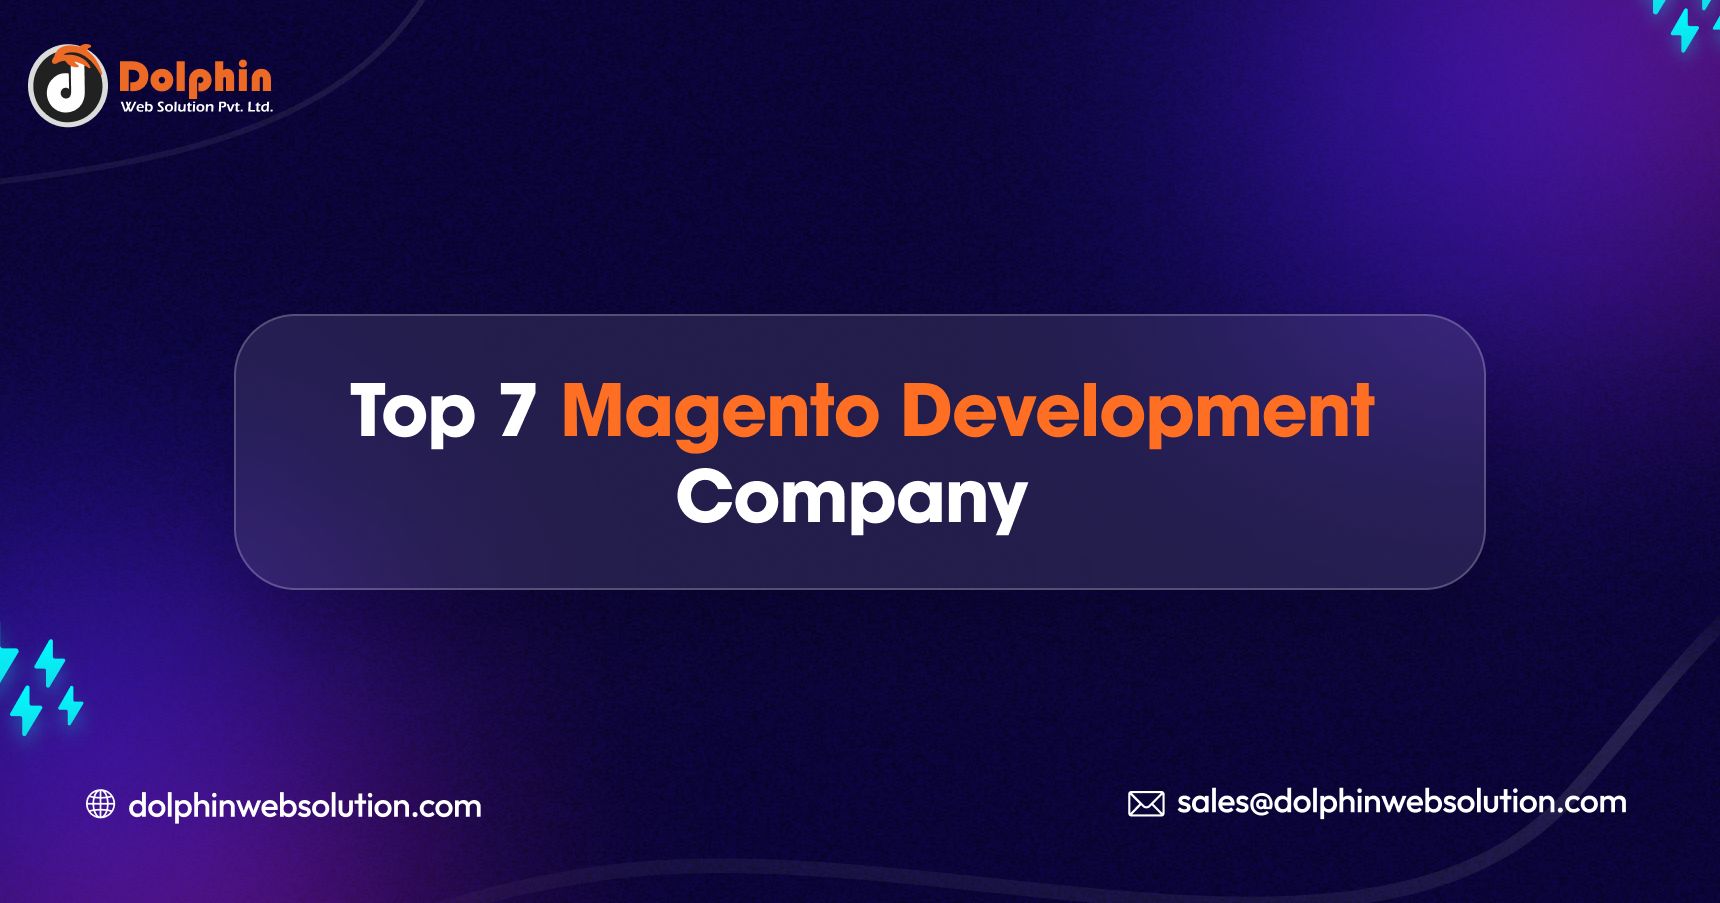 Top 7 Magento Development Company